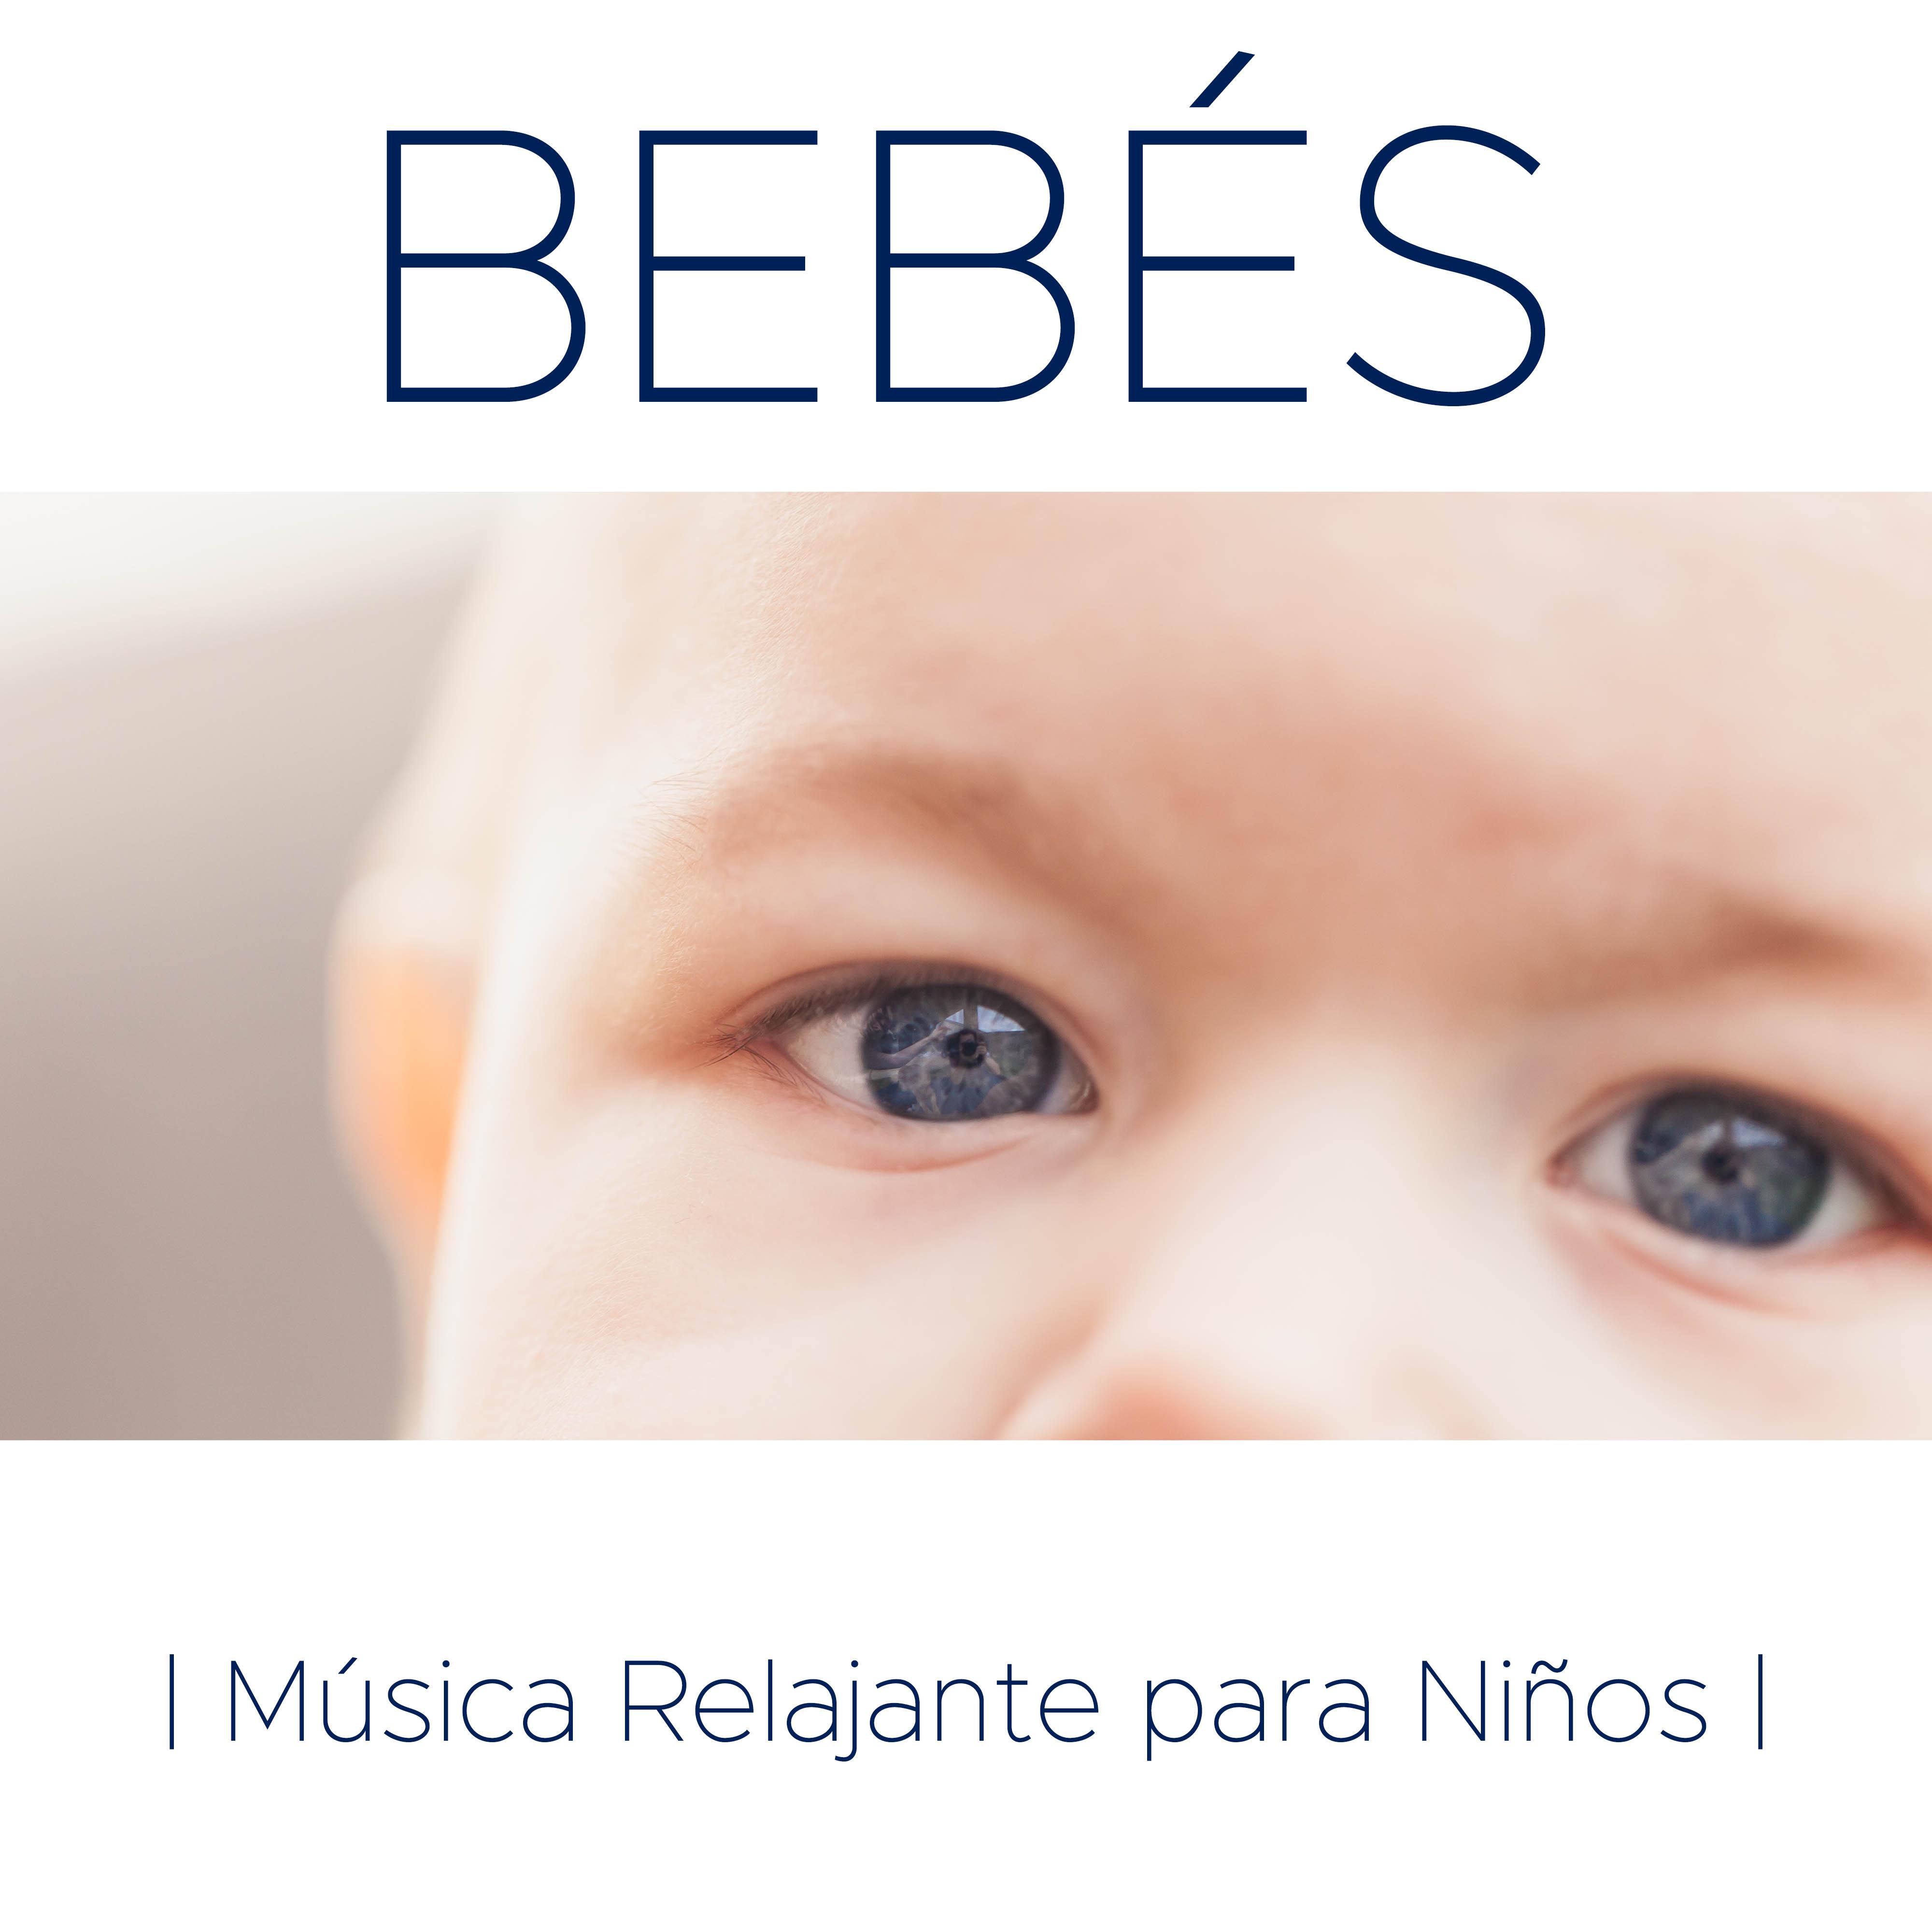 Bebés: Musica Relajante para Niños